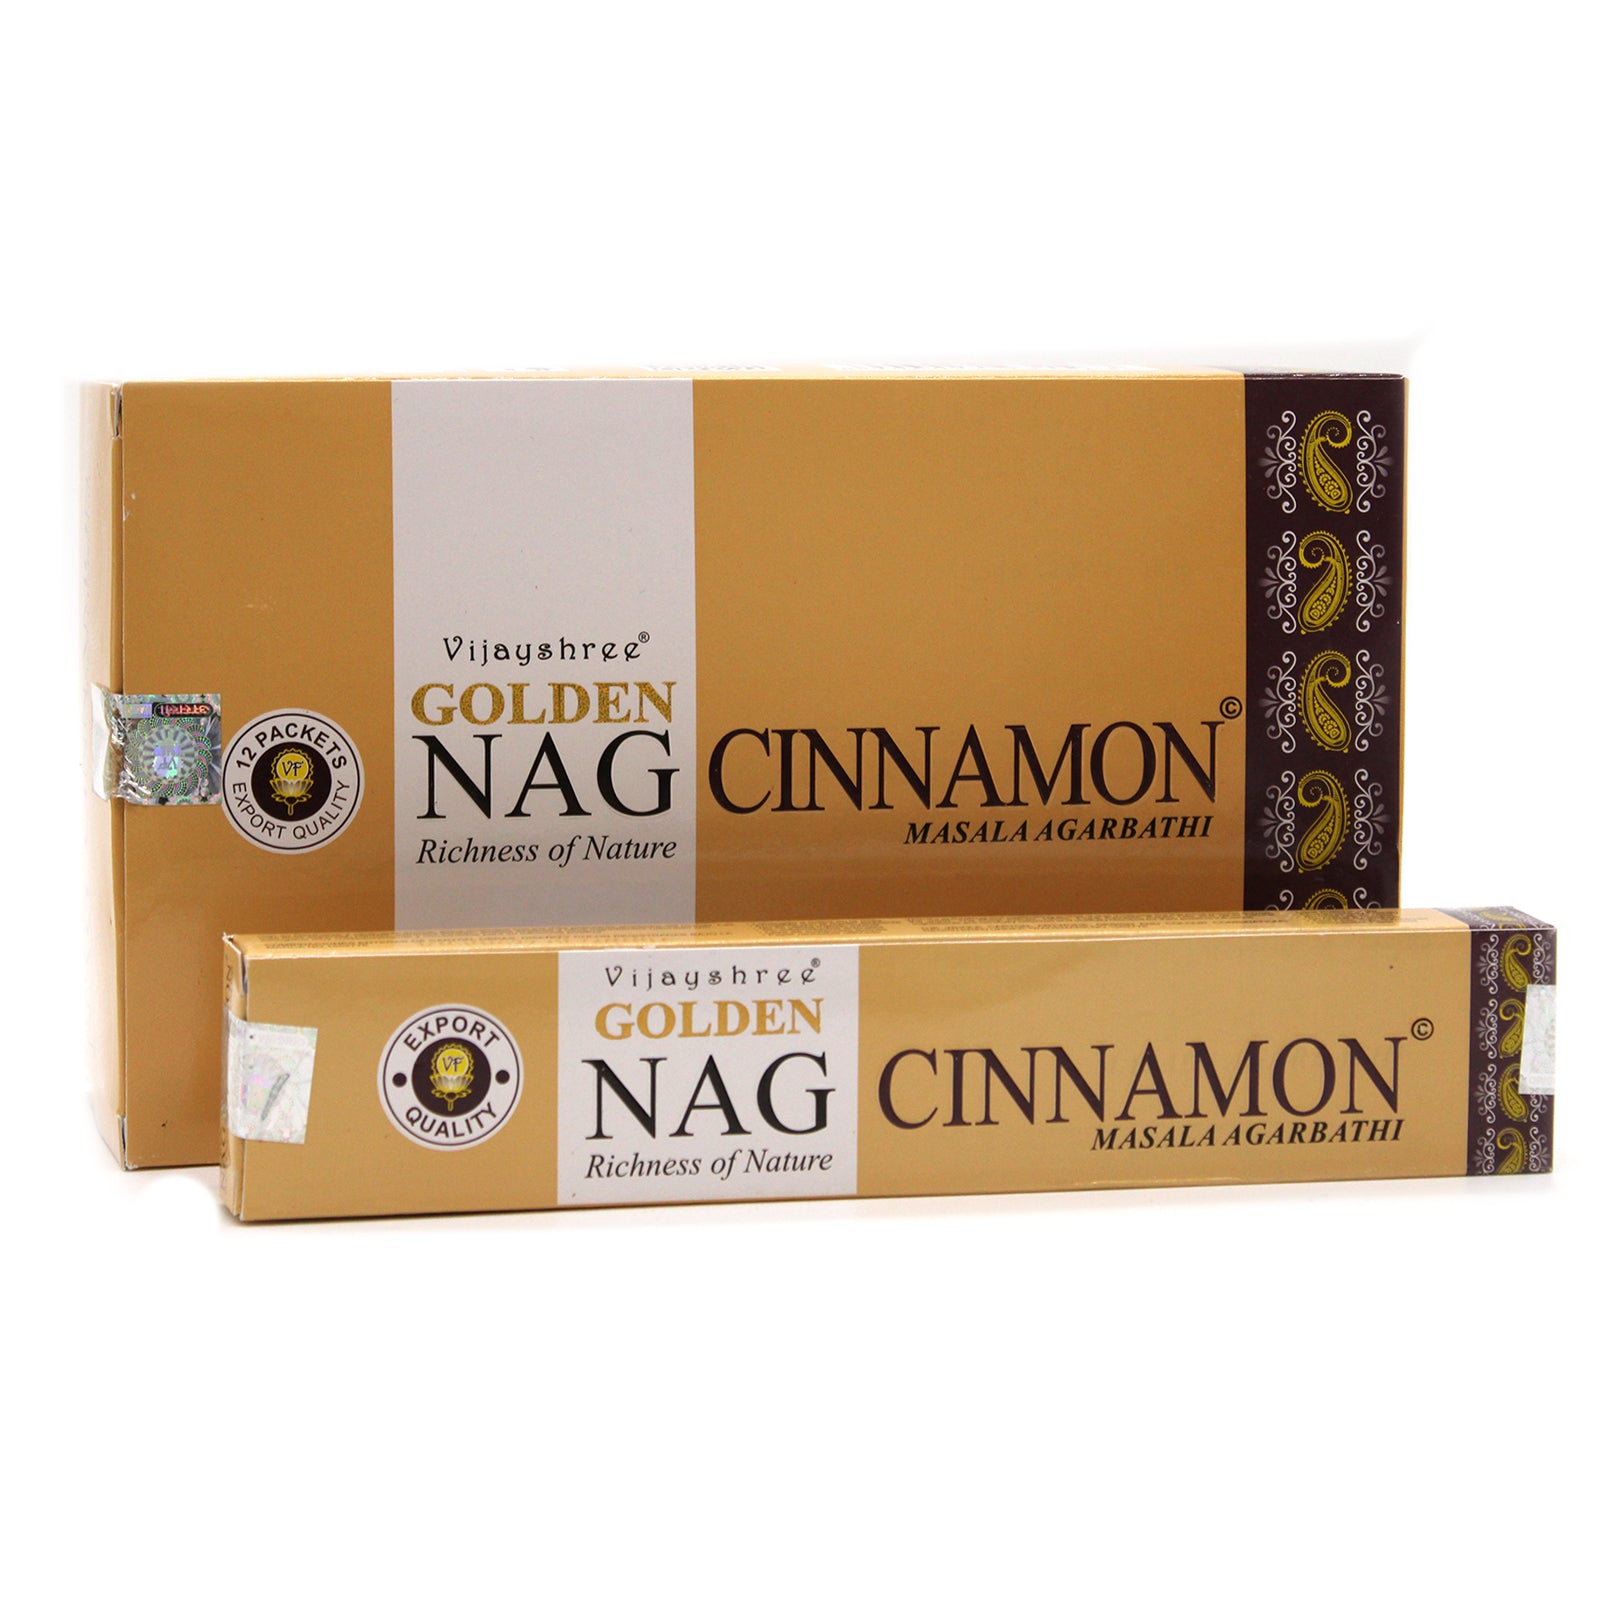 View 15g Golden Nag Cinnamon information